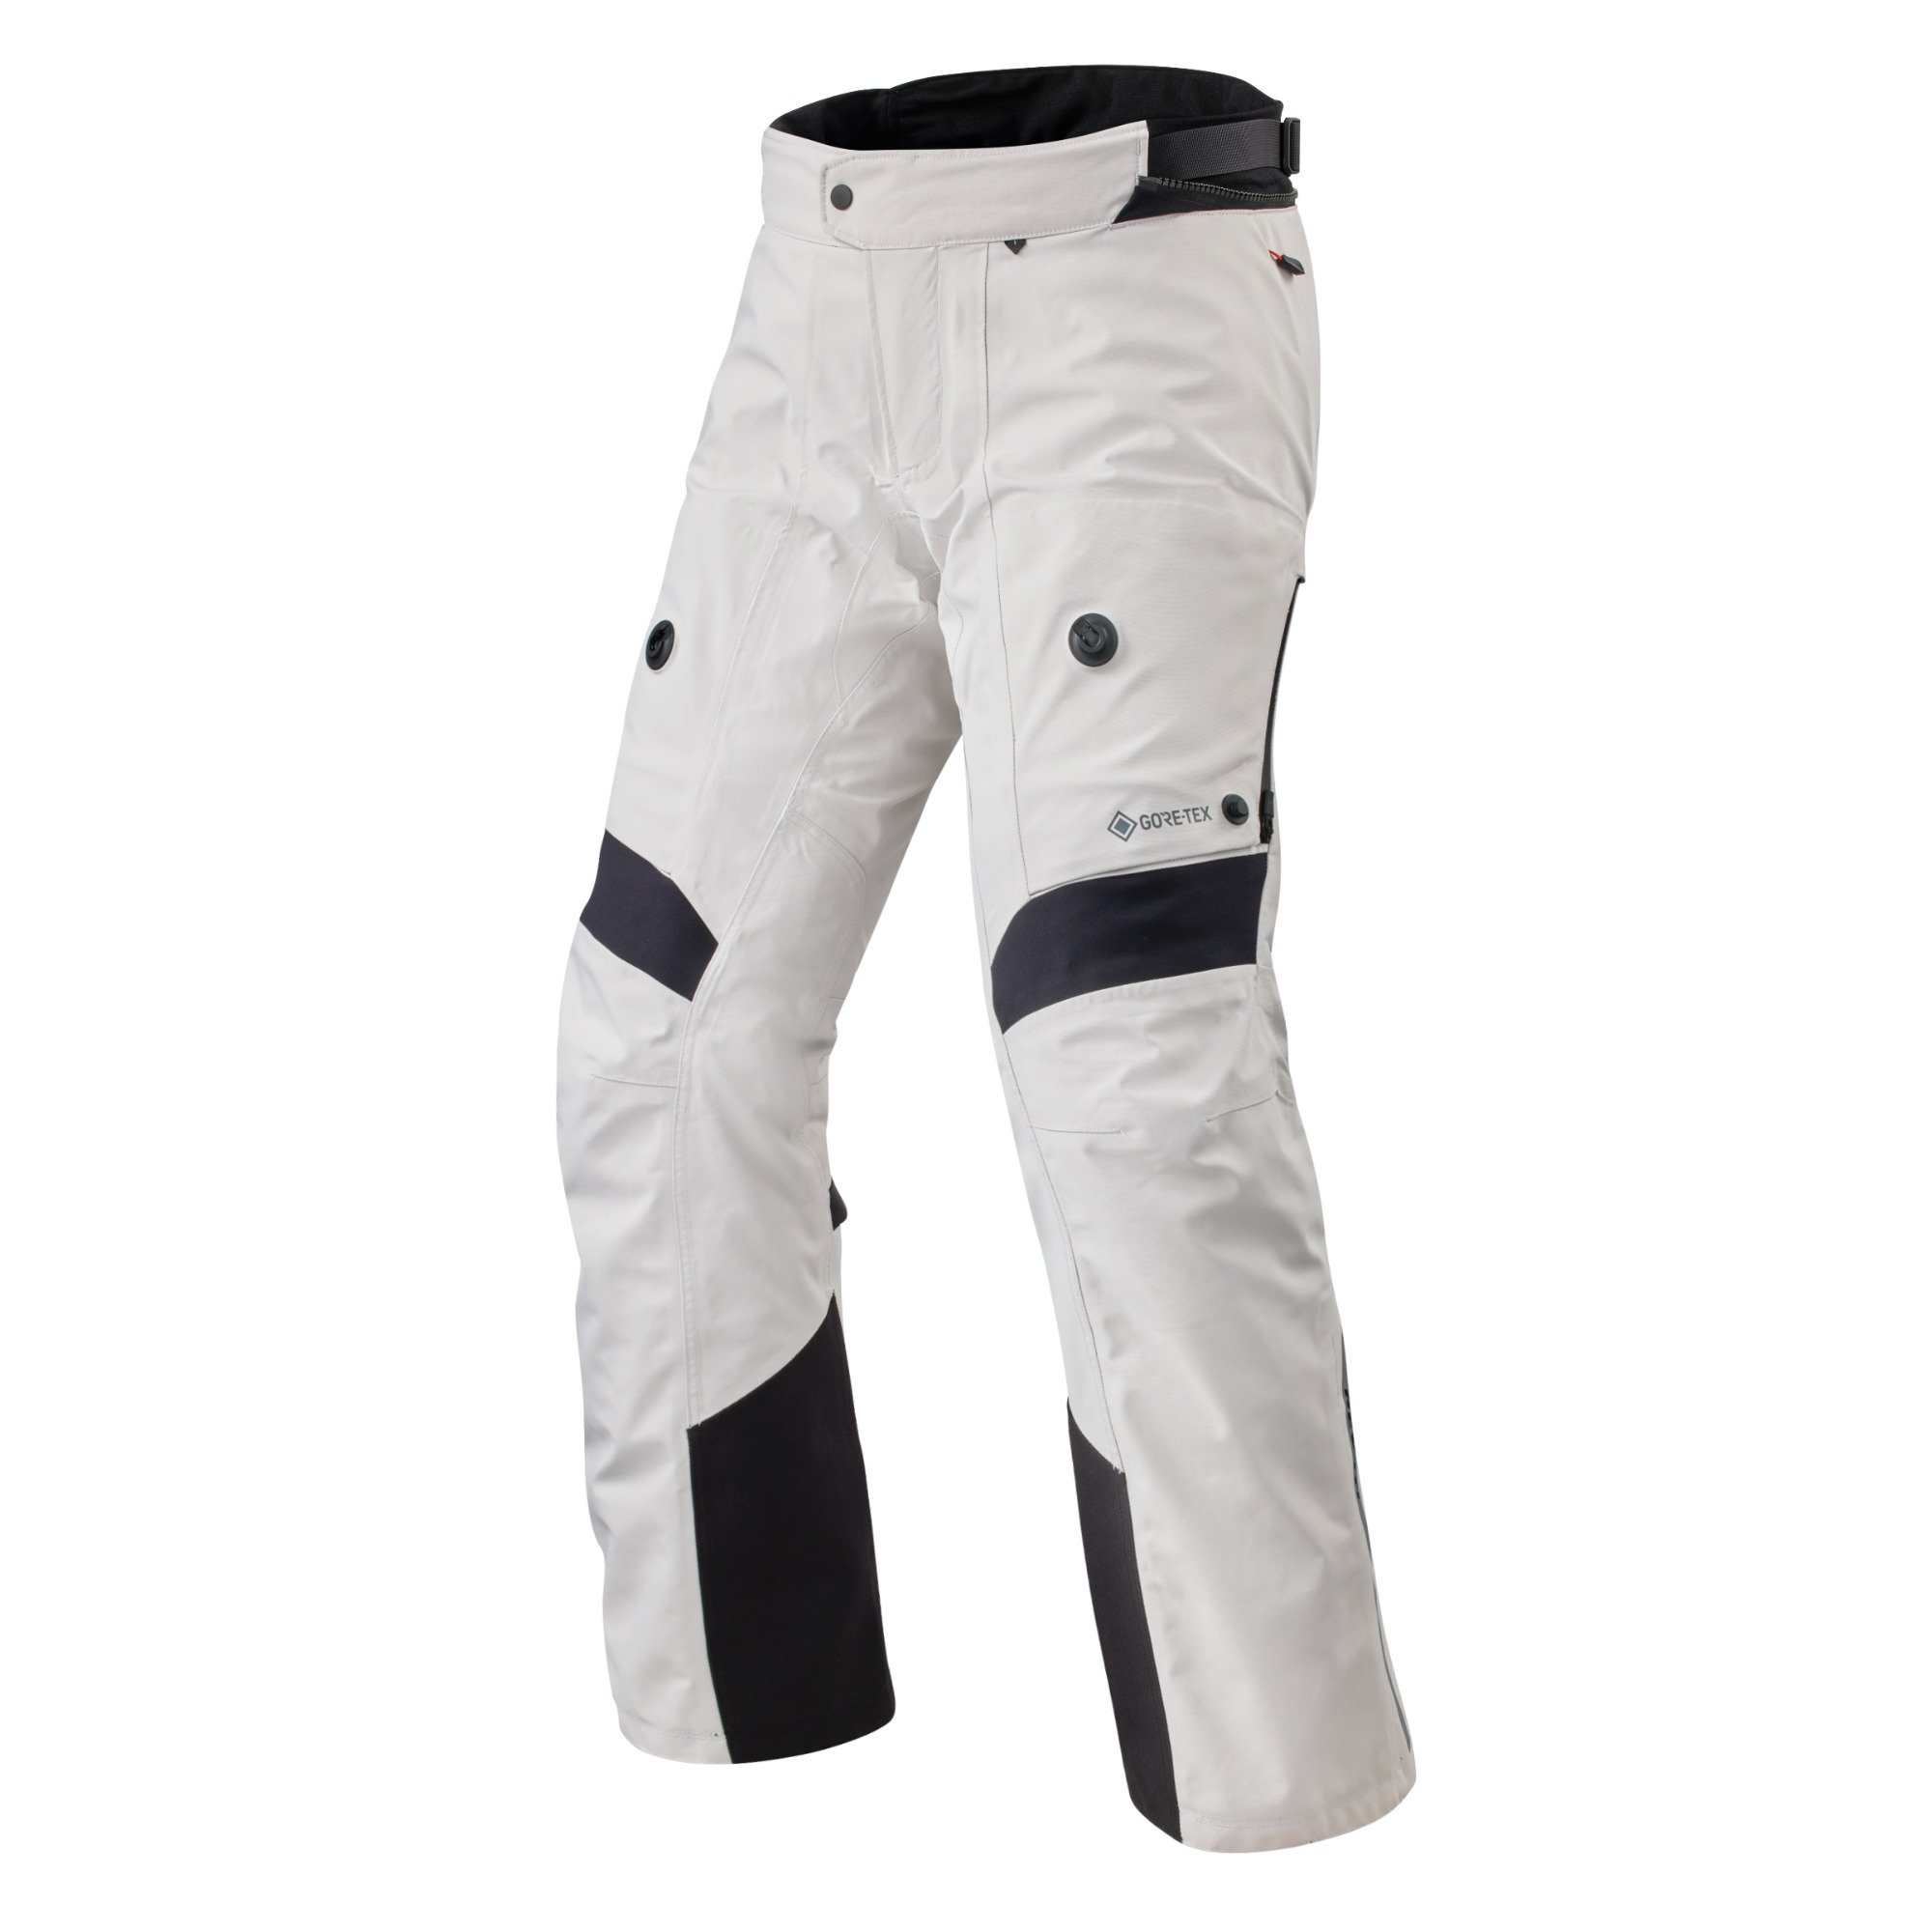 Image of REV'IT! Pants Poseidon 3 GTX Silver Black Short Motorcycle Pants Talla M